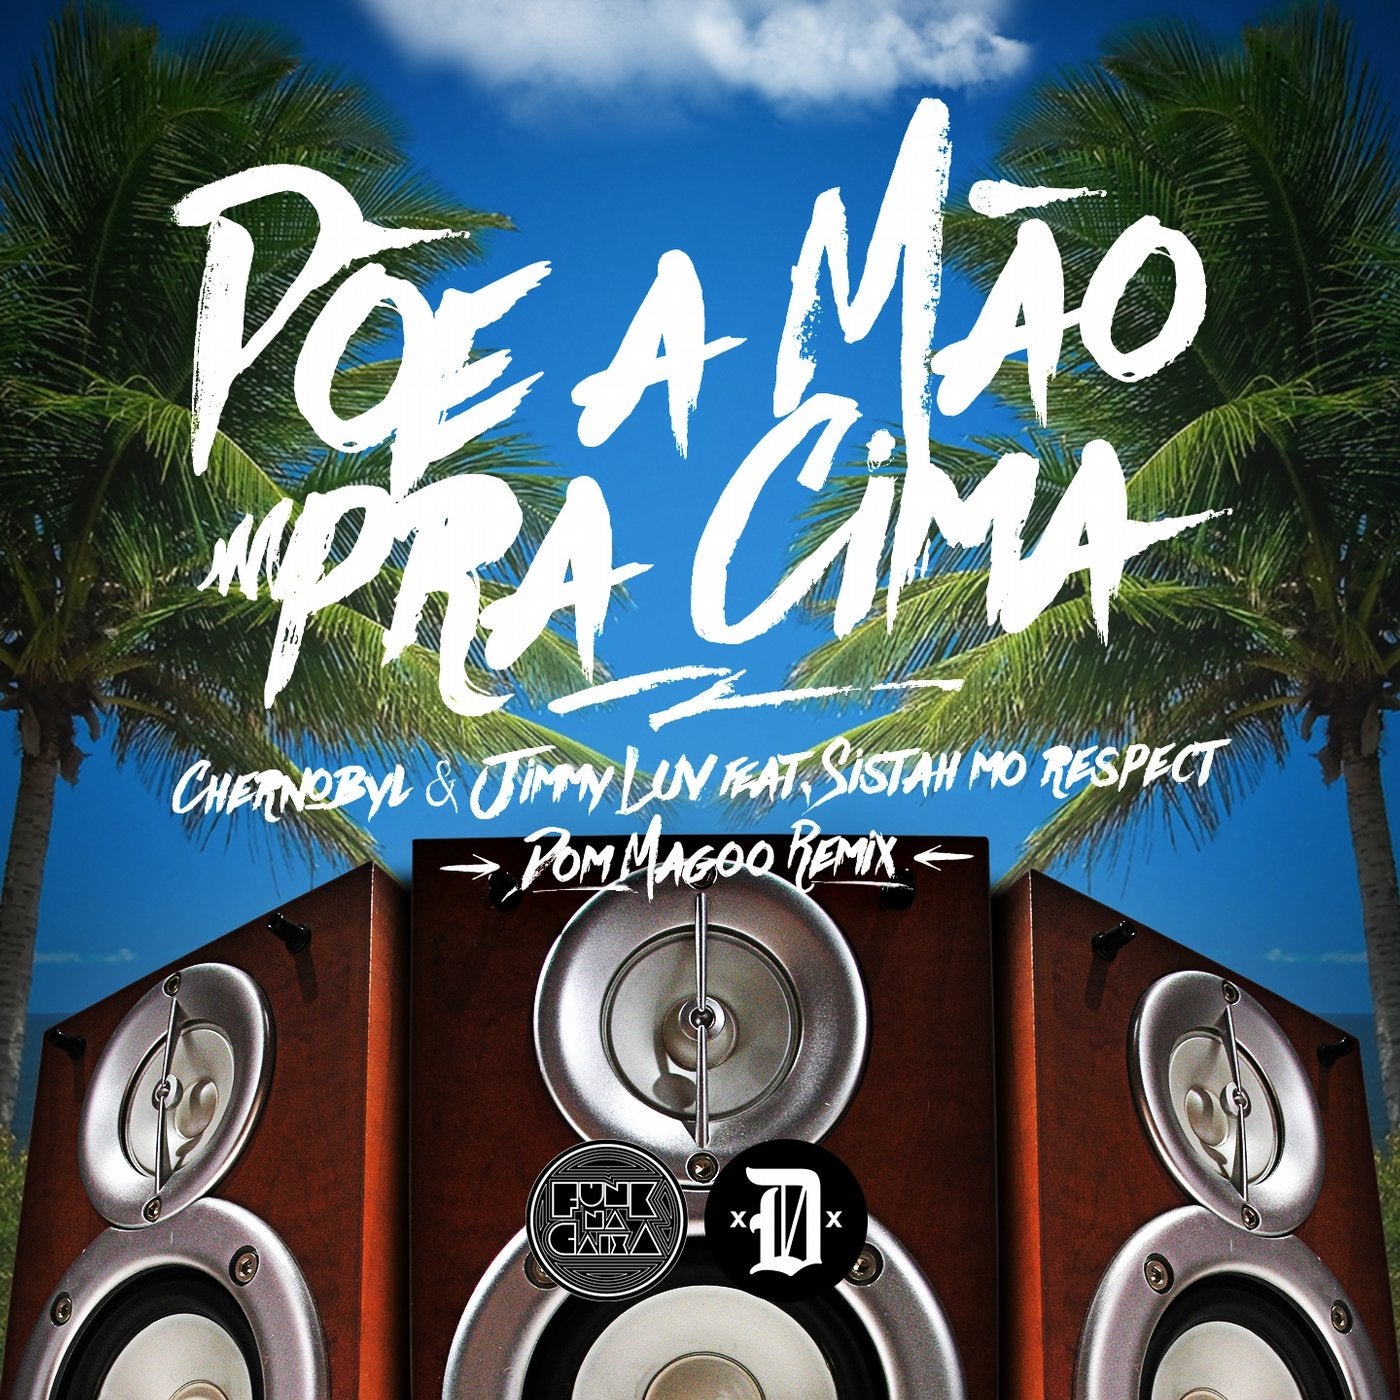 Poe a Mao pra Cima (feat. Sistah Mo Respect) [Dom Magoo Remix]